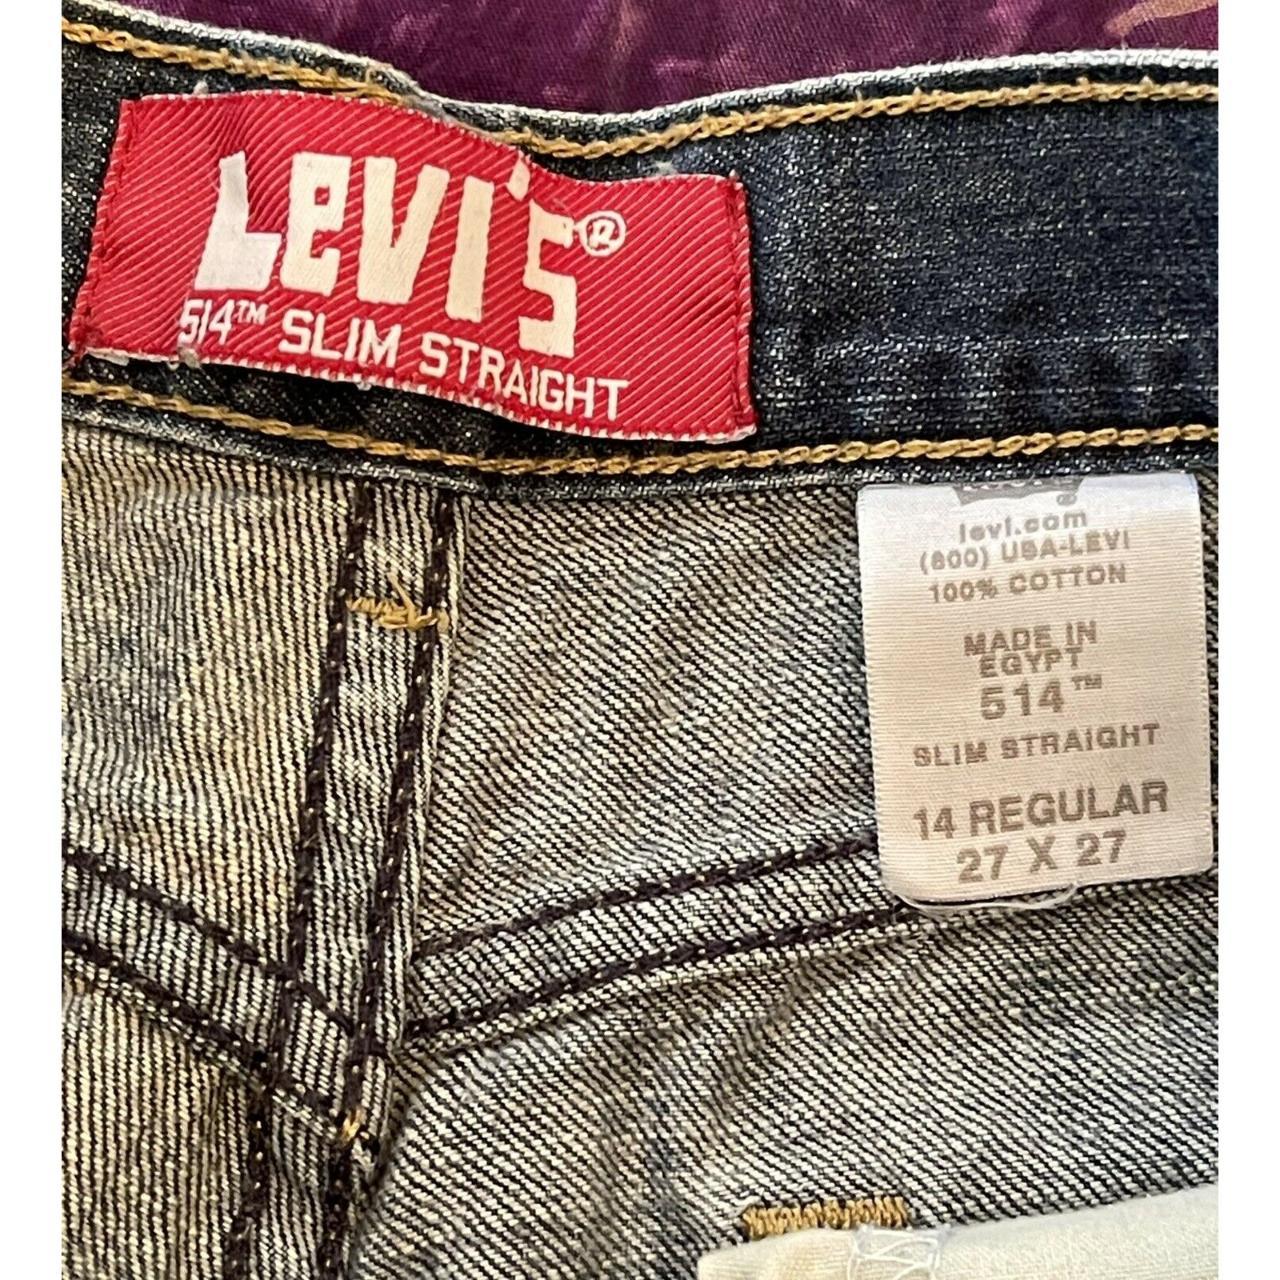 Levis Red Tab 514 Slim Straight Jeans 27